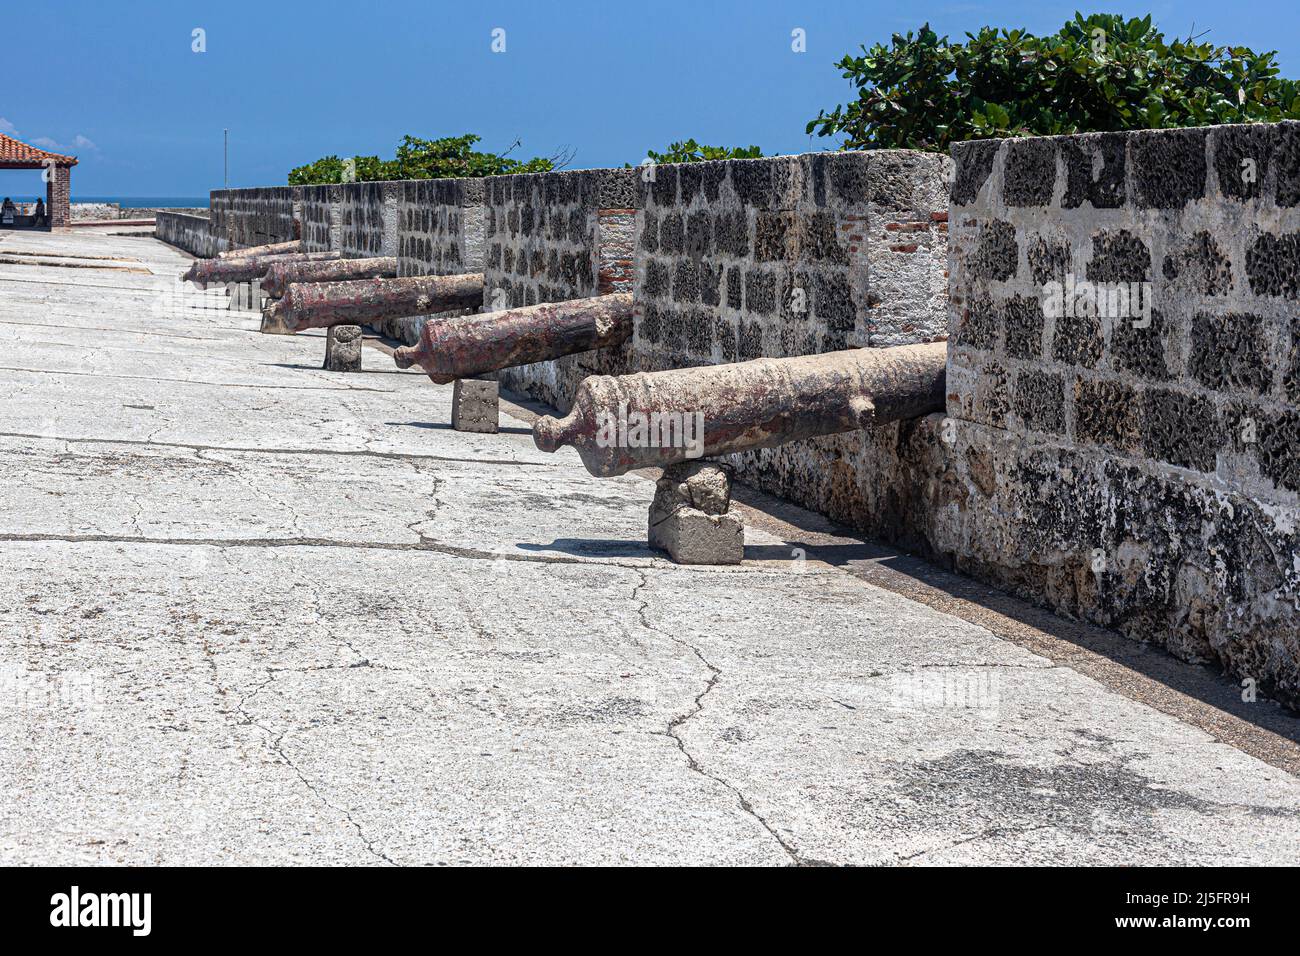 Historic wall, Cartagena de Indias, Colombia. Stock Photo